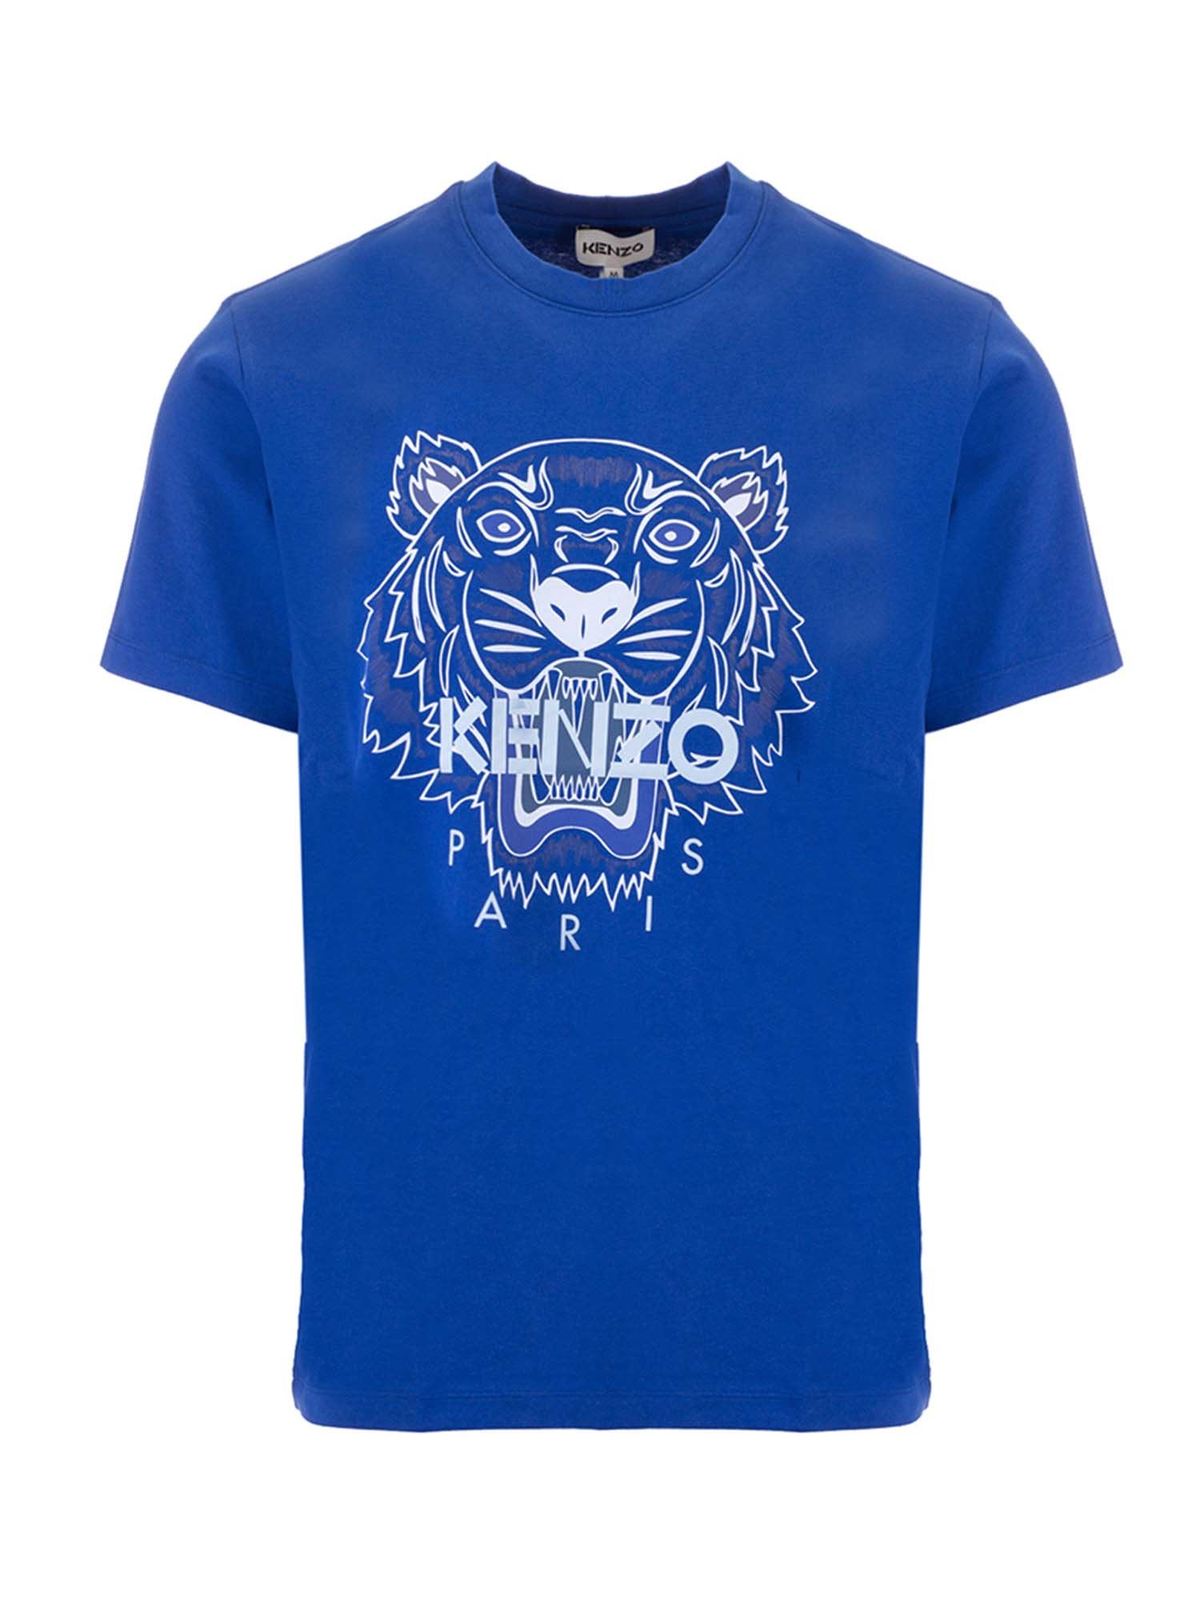 royal blue kenzo shirt